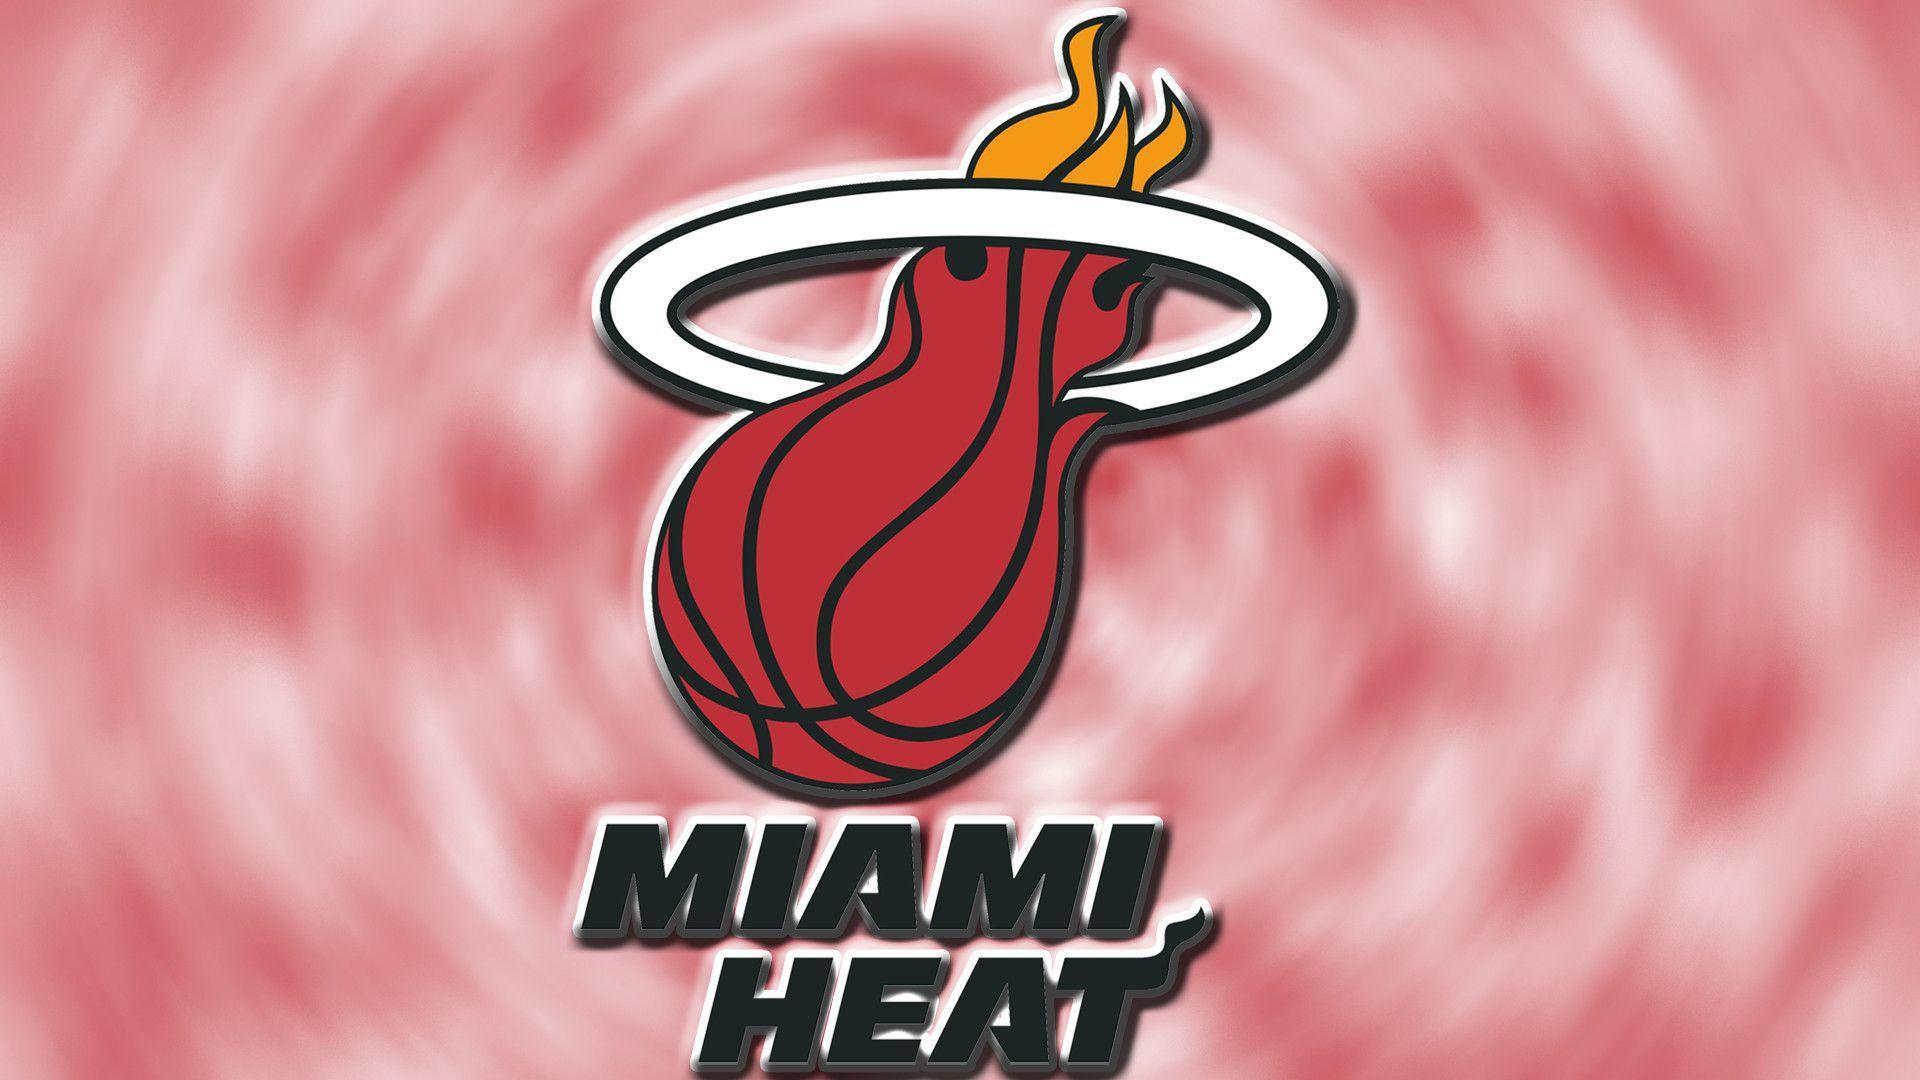 miami heat logo Image HD Wallpaper